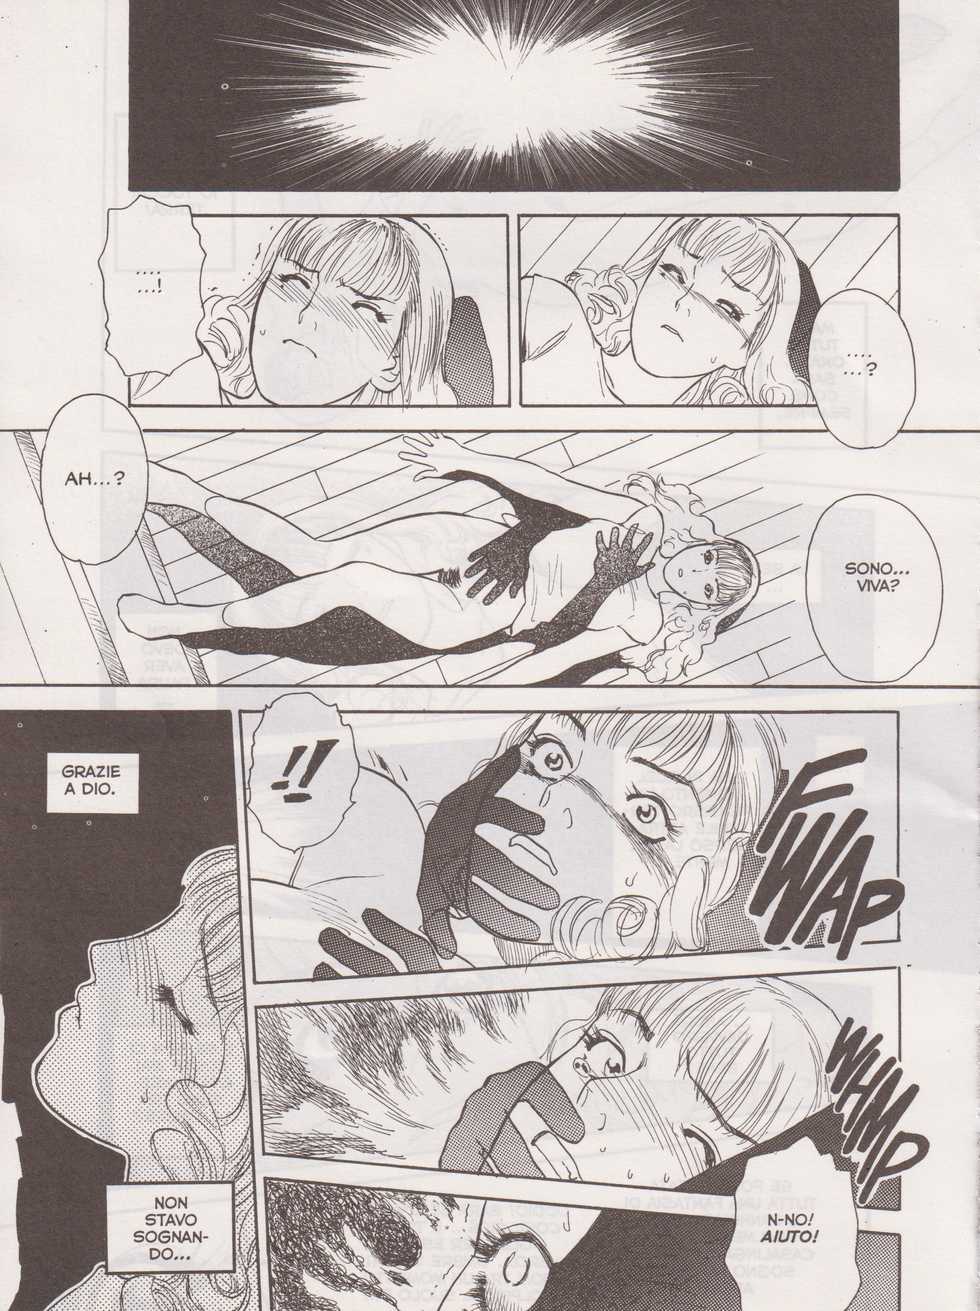 [Ronin Tenjiku] X-Manga 4 - Lust - parte 1 di 2 [Italian] - Page 39